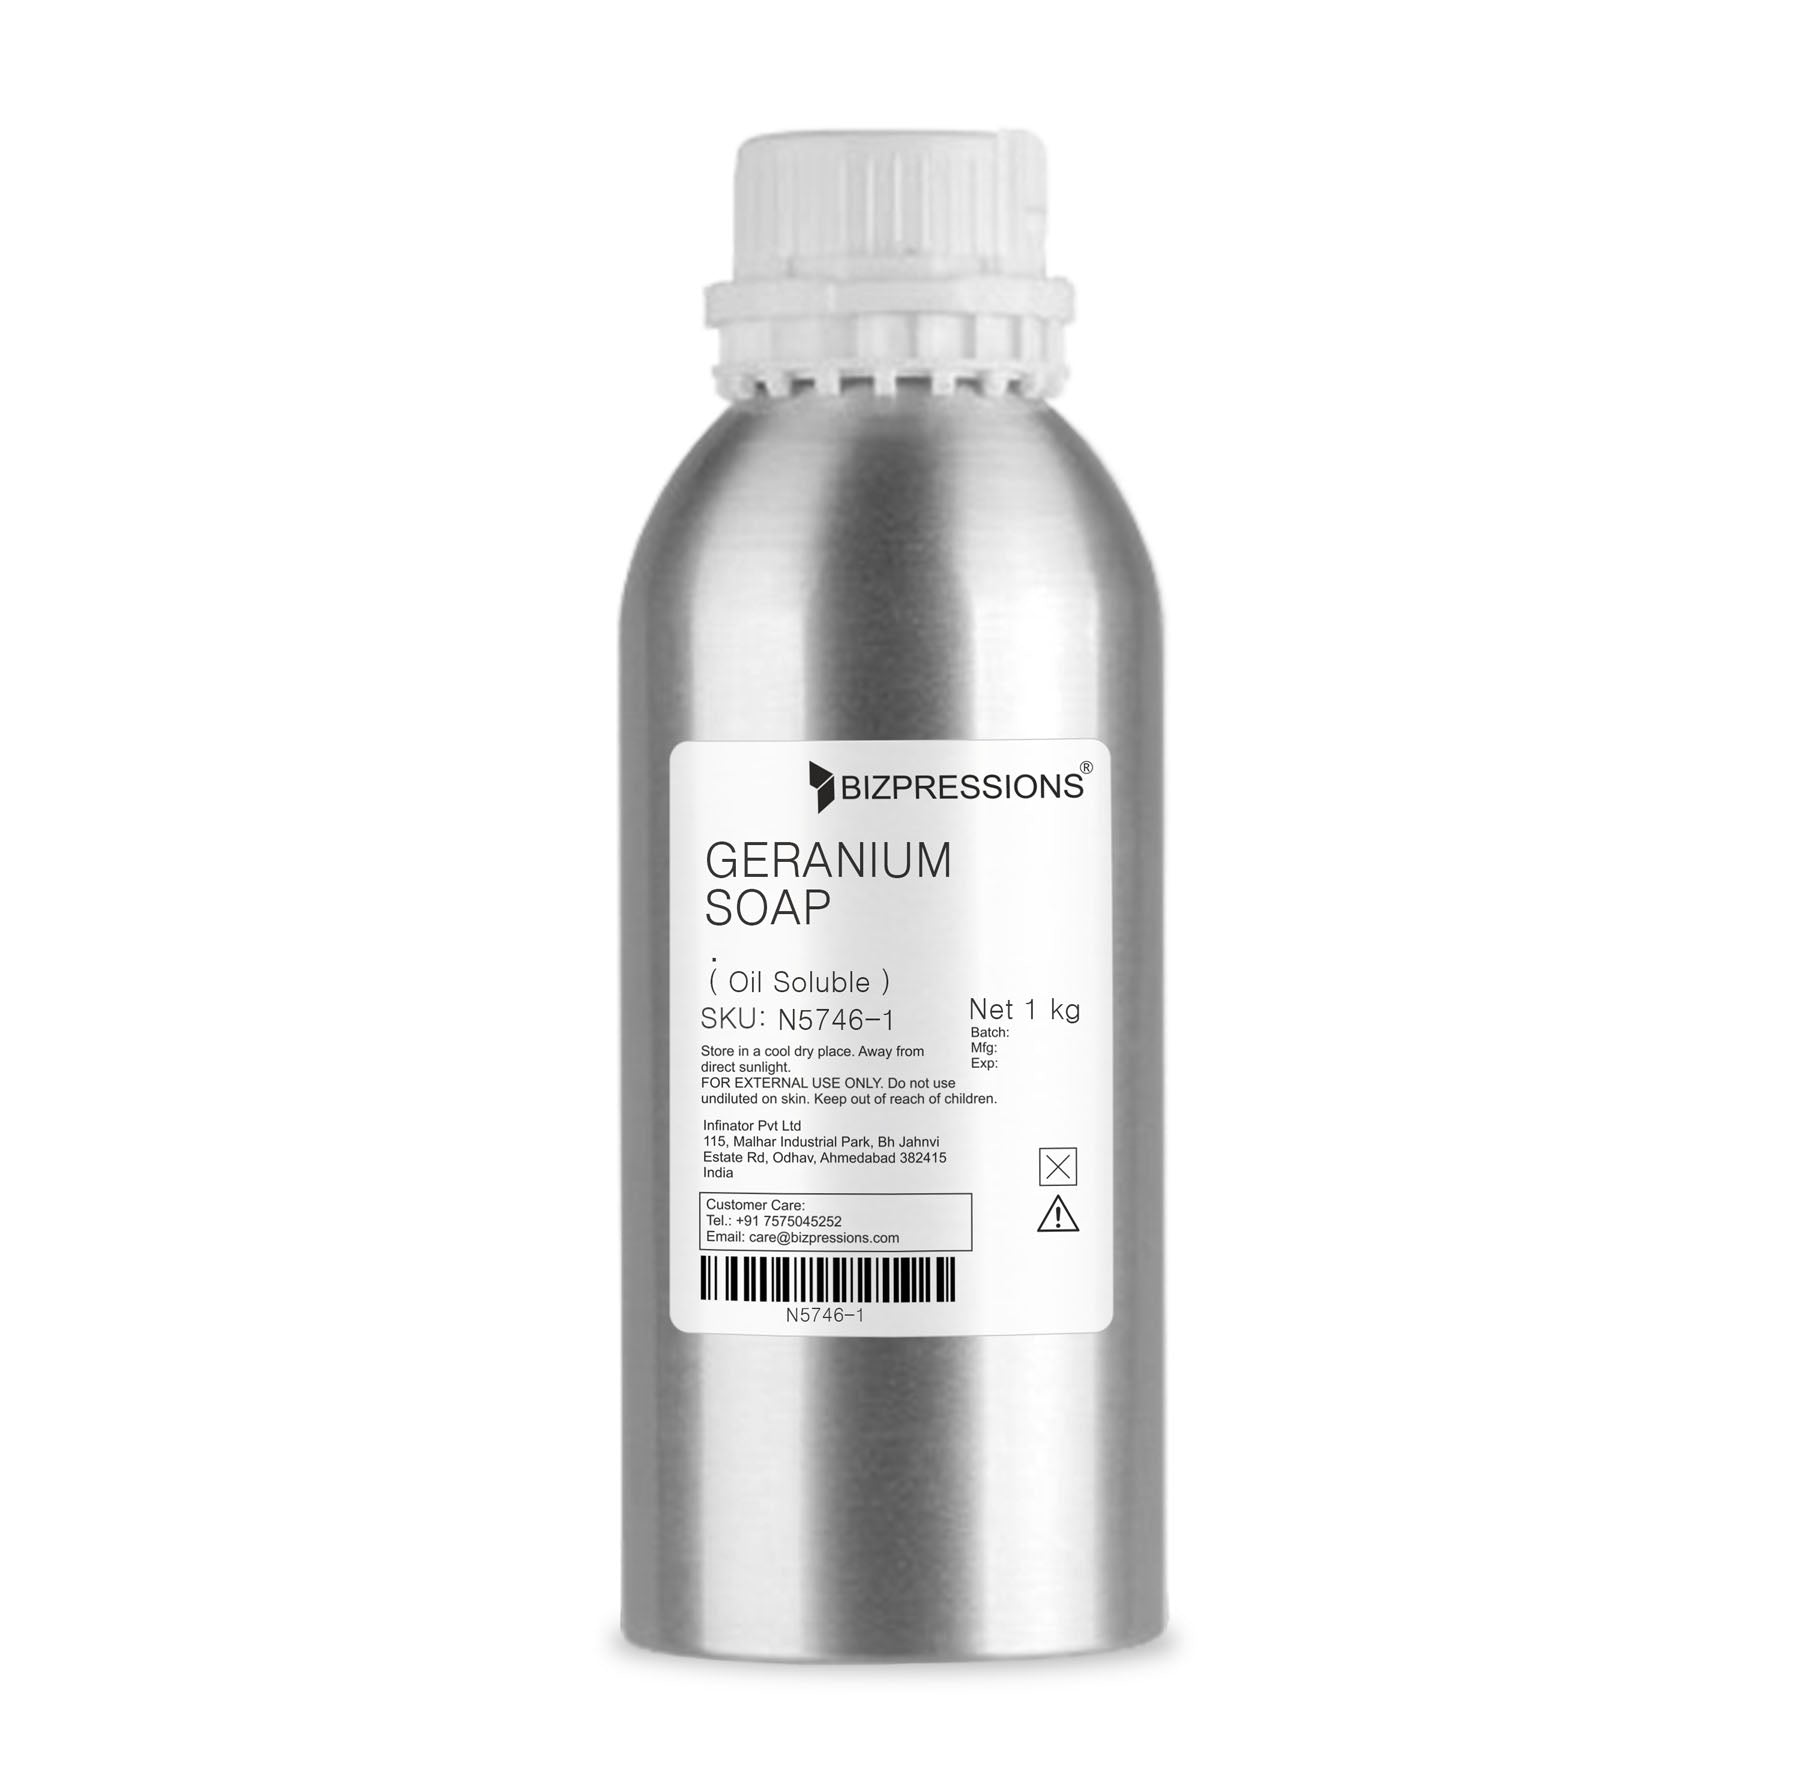 GERANIUM SOAP - Fragrance ( Oil Soluble ) - 1 kg